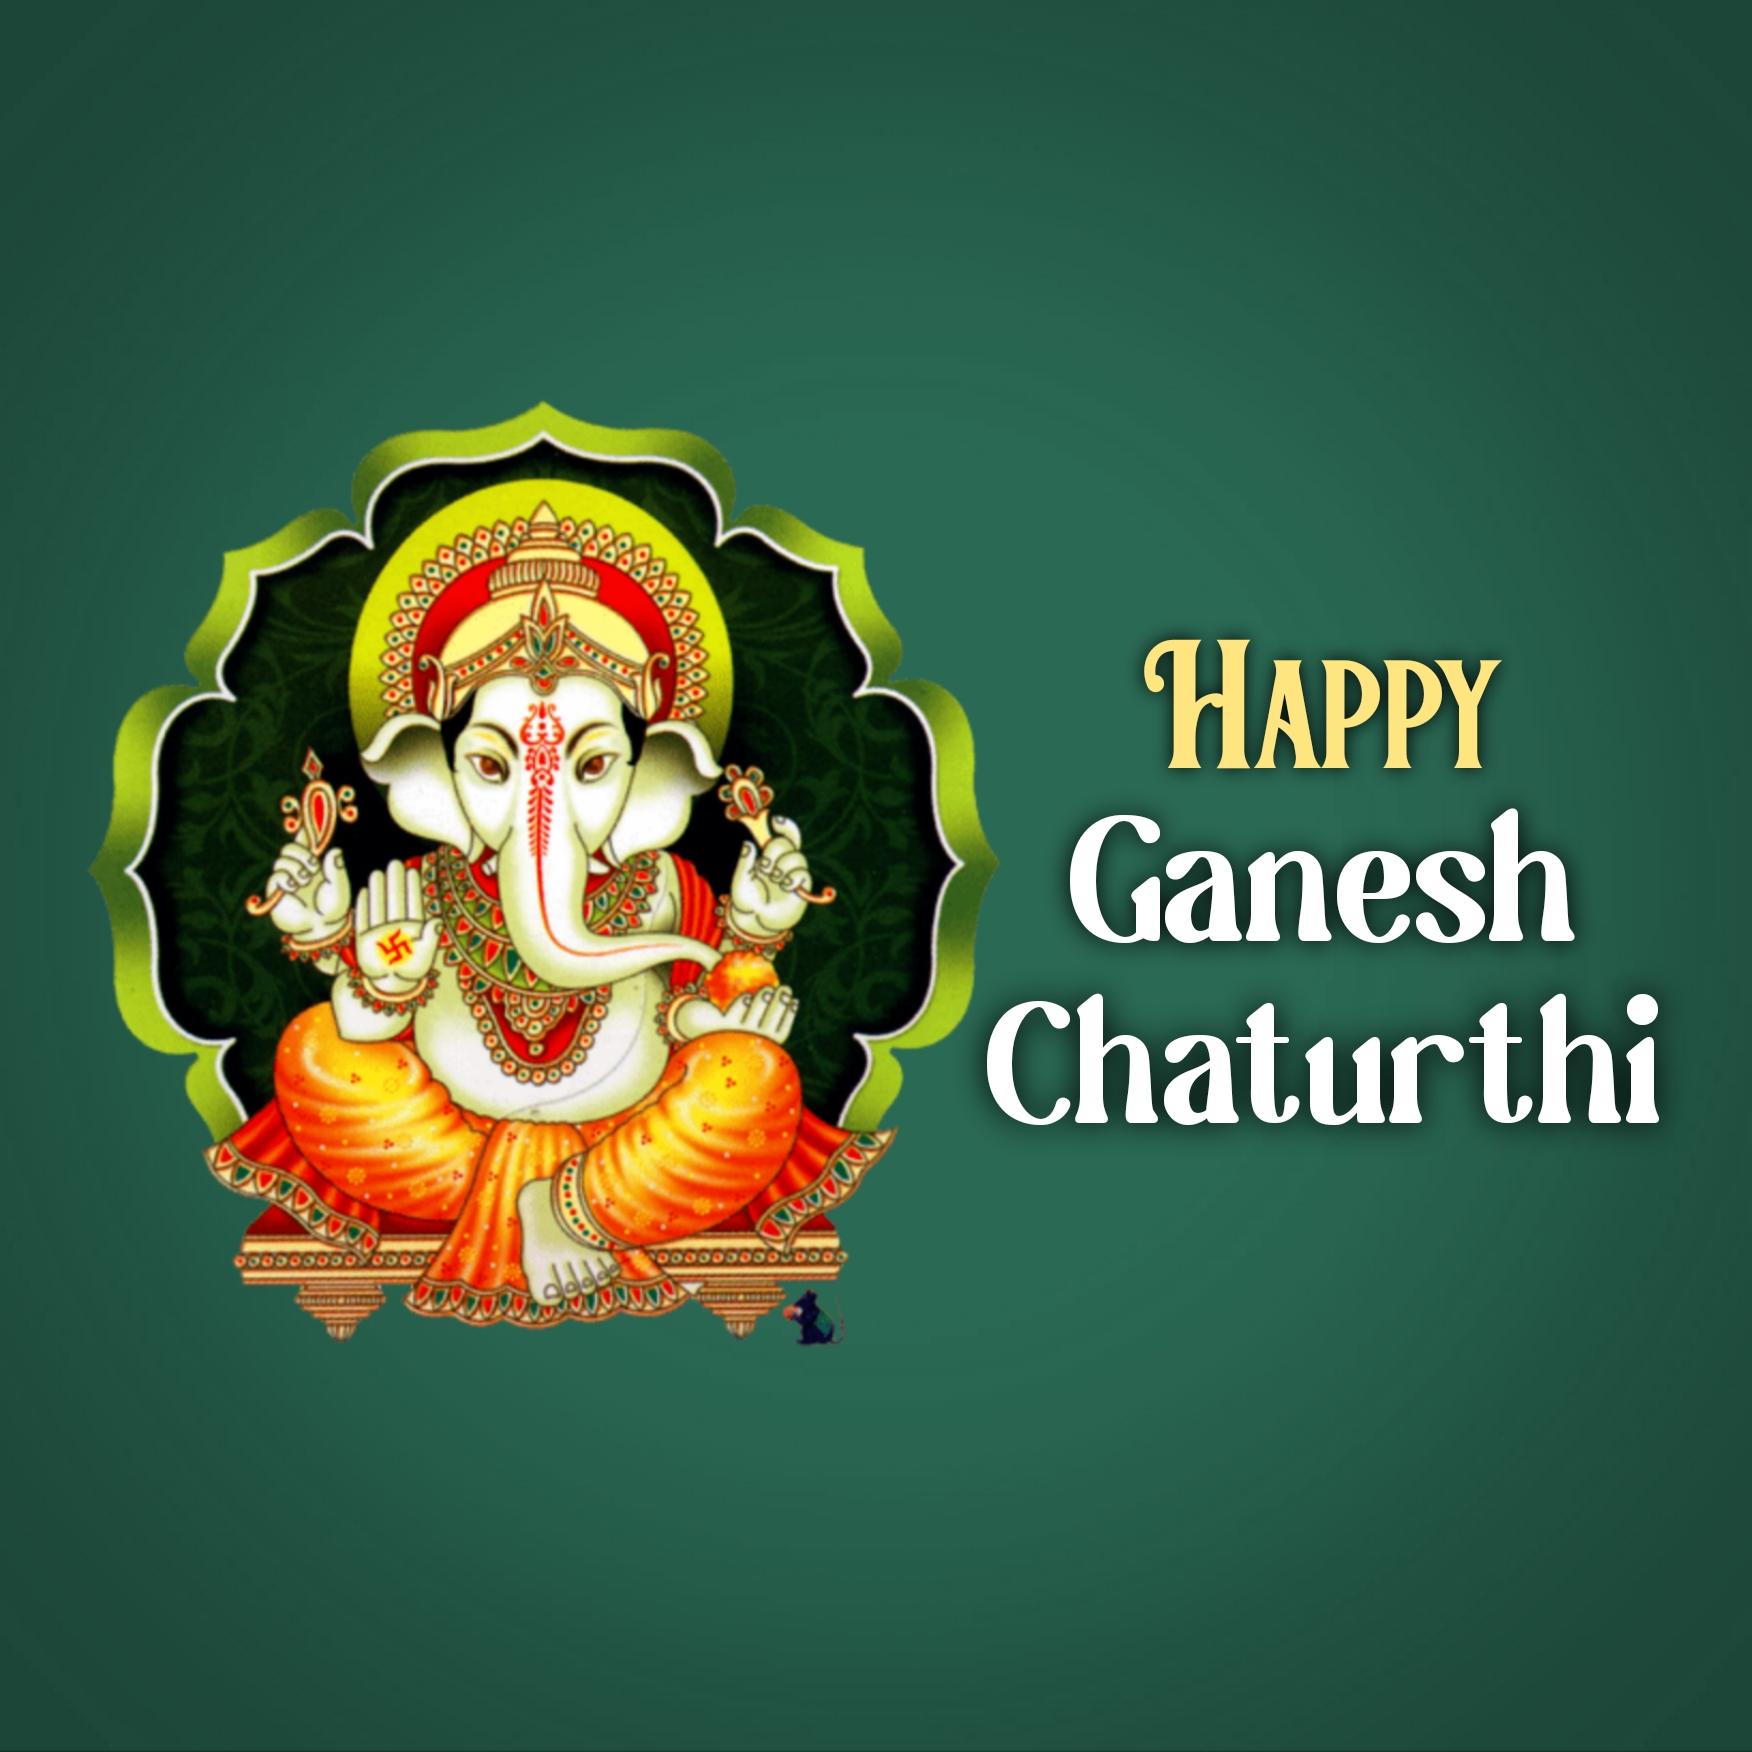 Whatsapp Happy Ganesh Chaturthi Images for DP